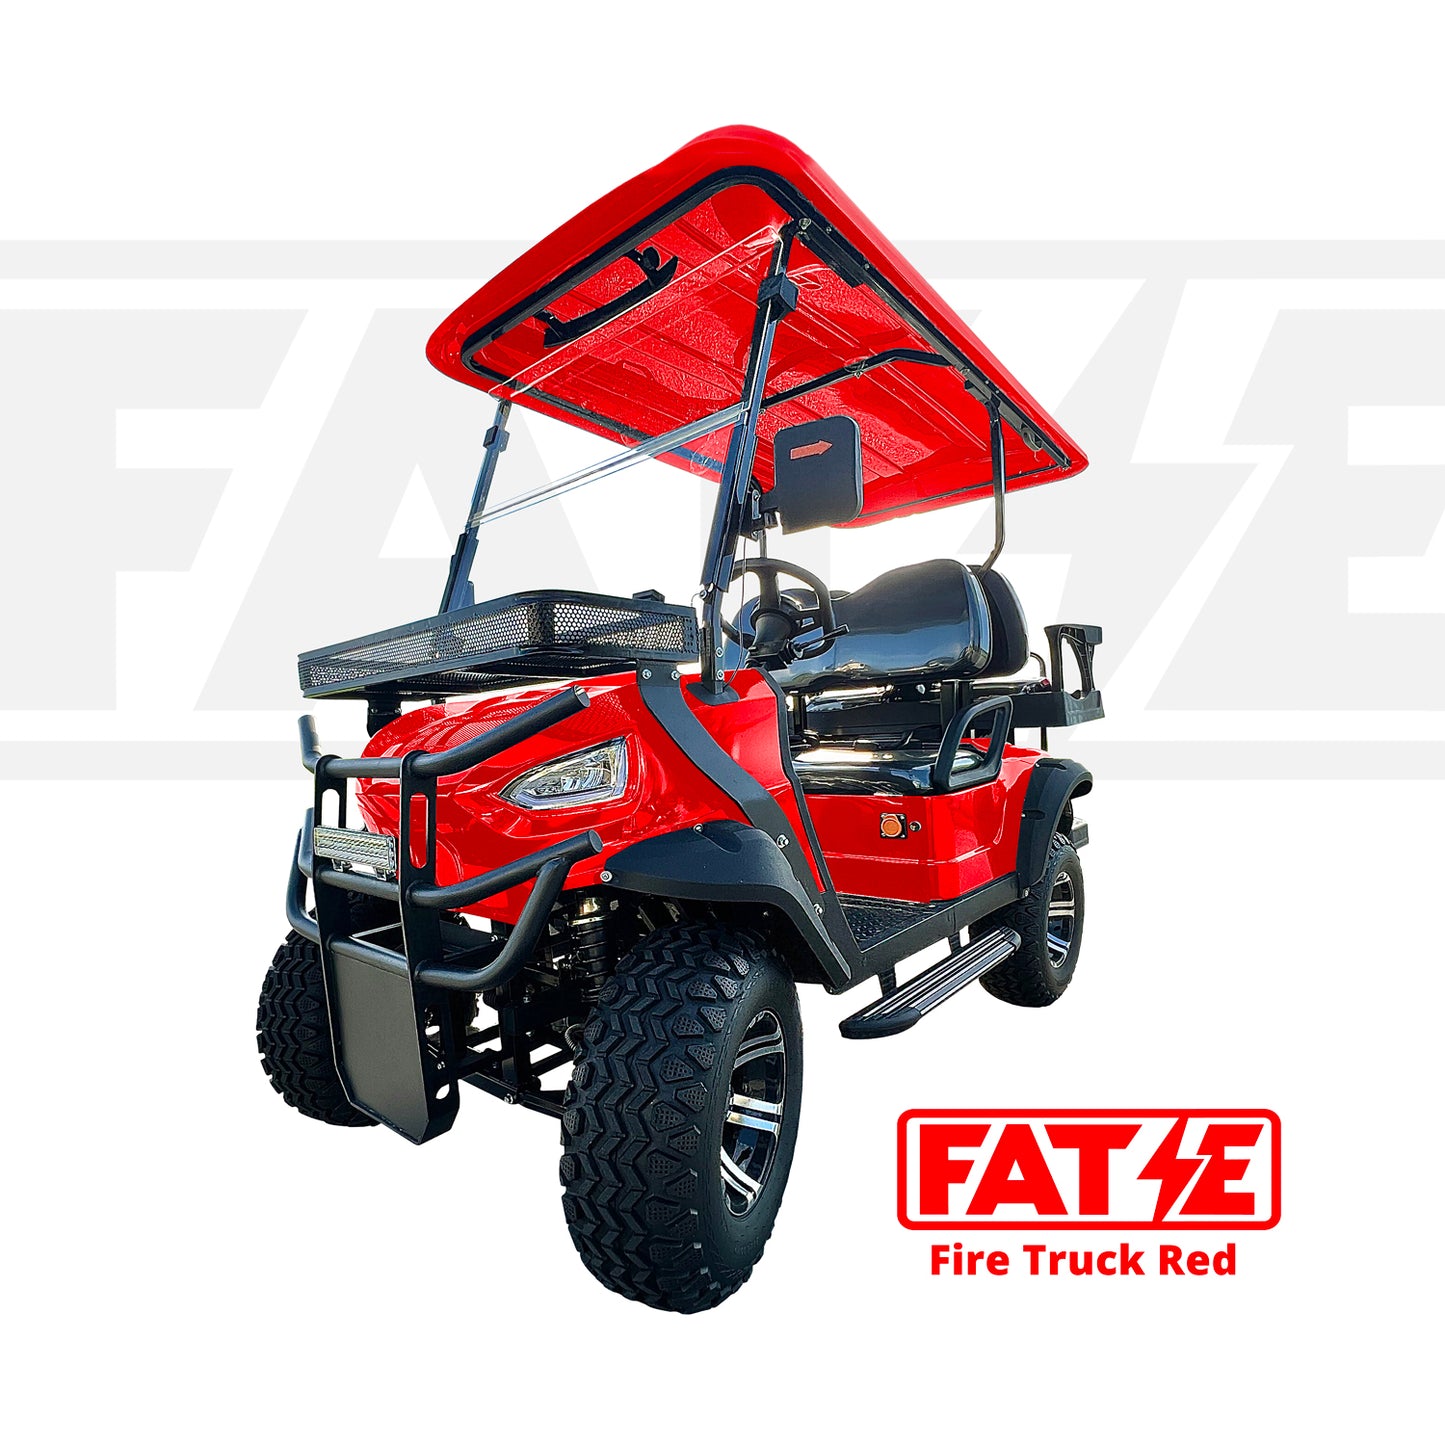 Fat E - Fire Truck Red